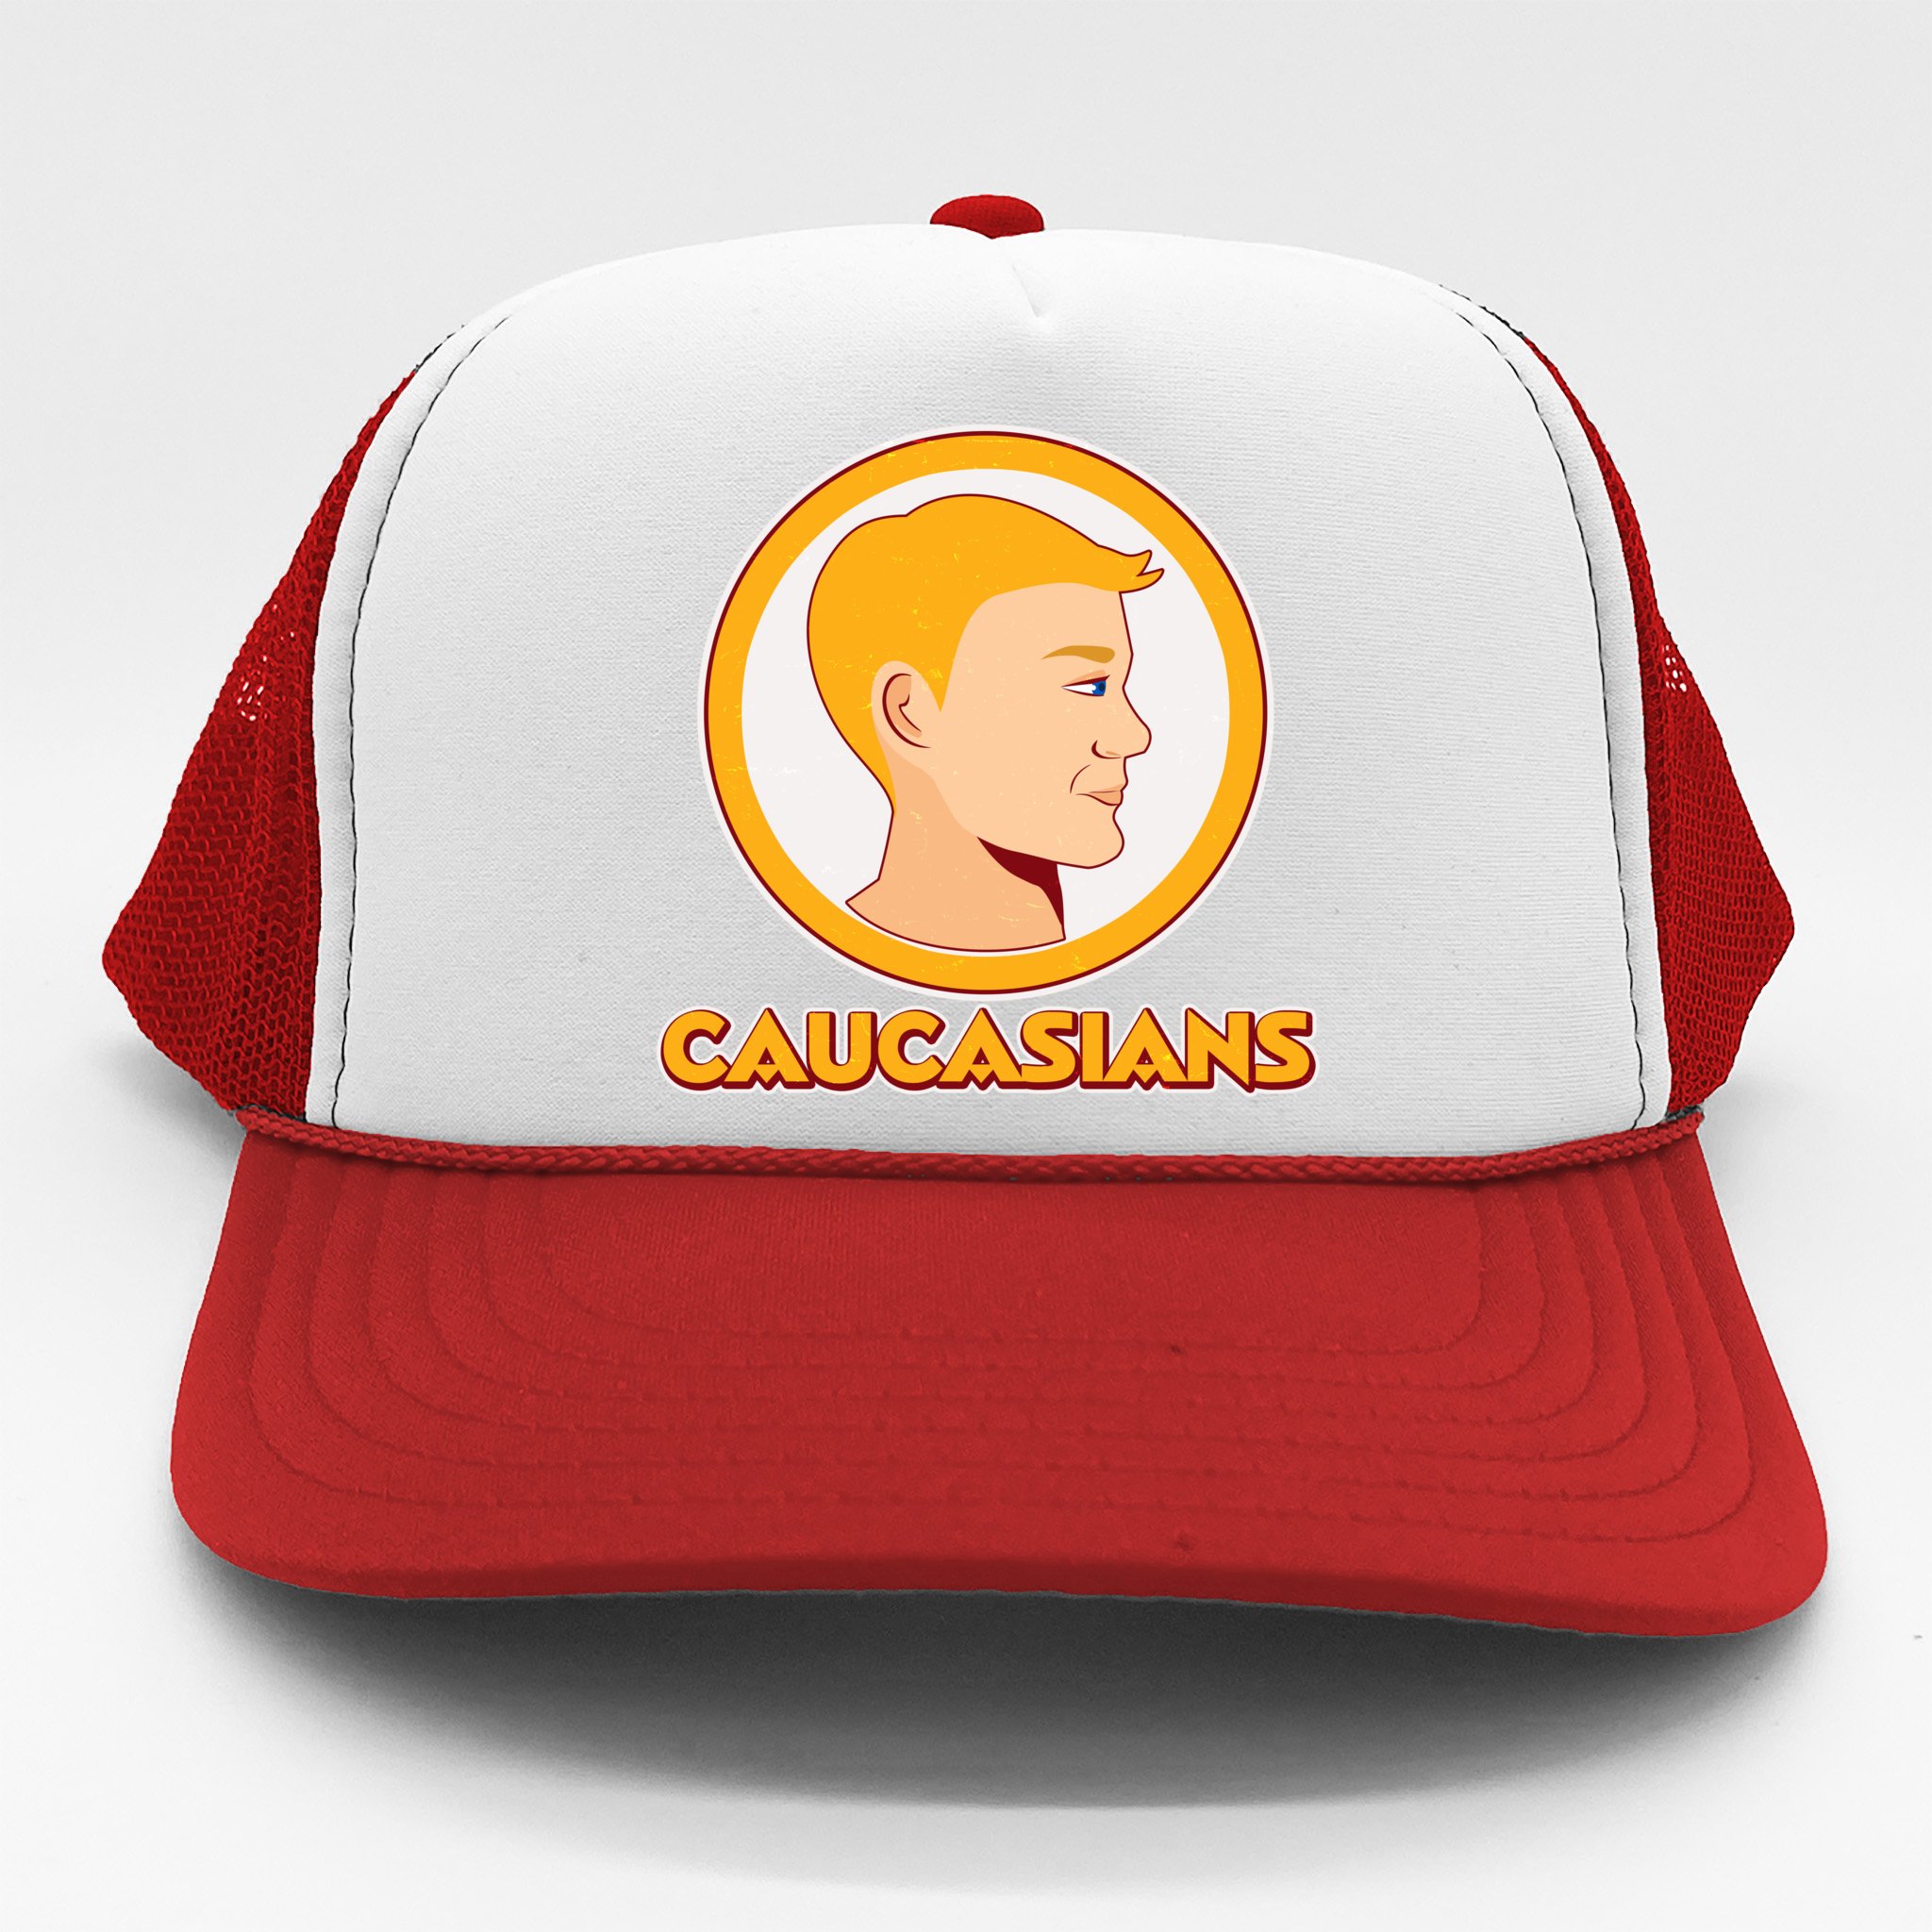 Caucasians Trucker Hat